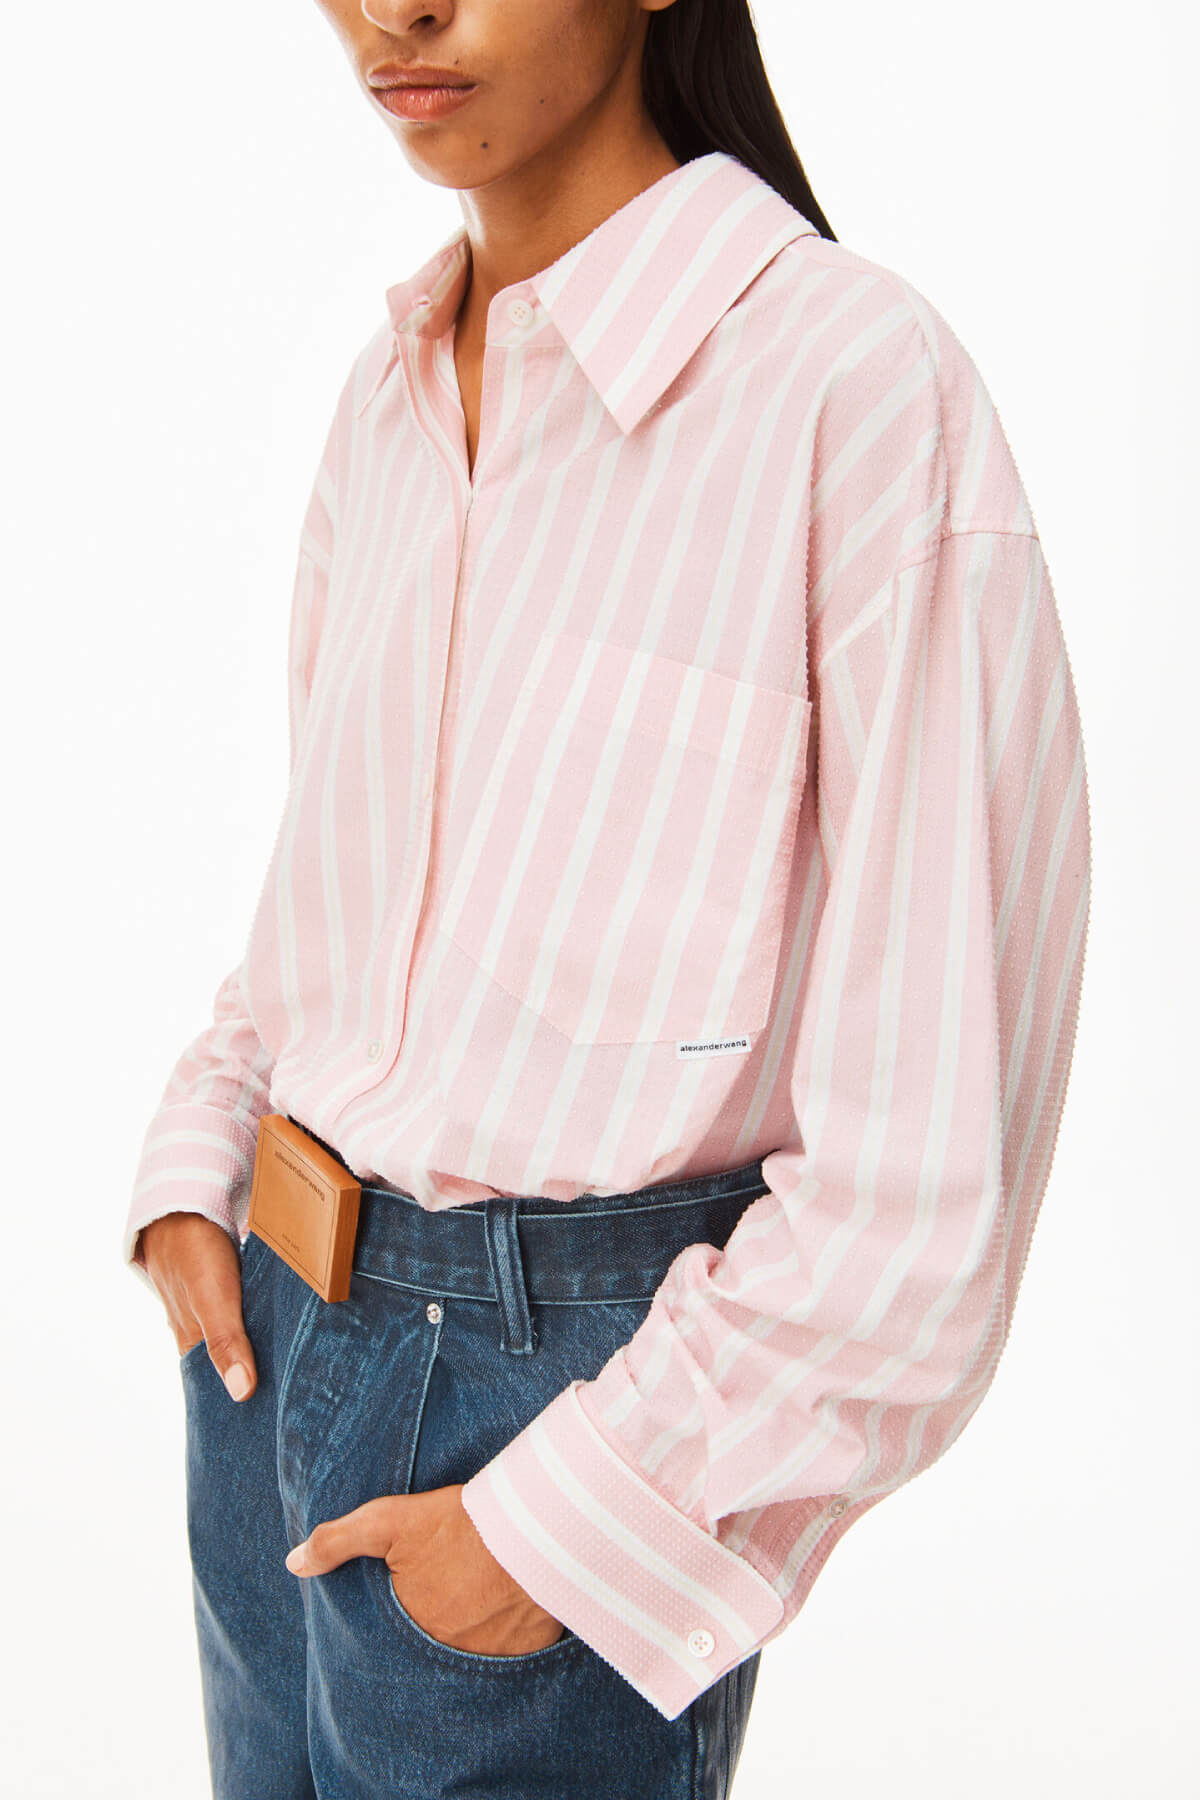 Alexander Wang Clear Hotfix Shirt Jacket - Pink/ White